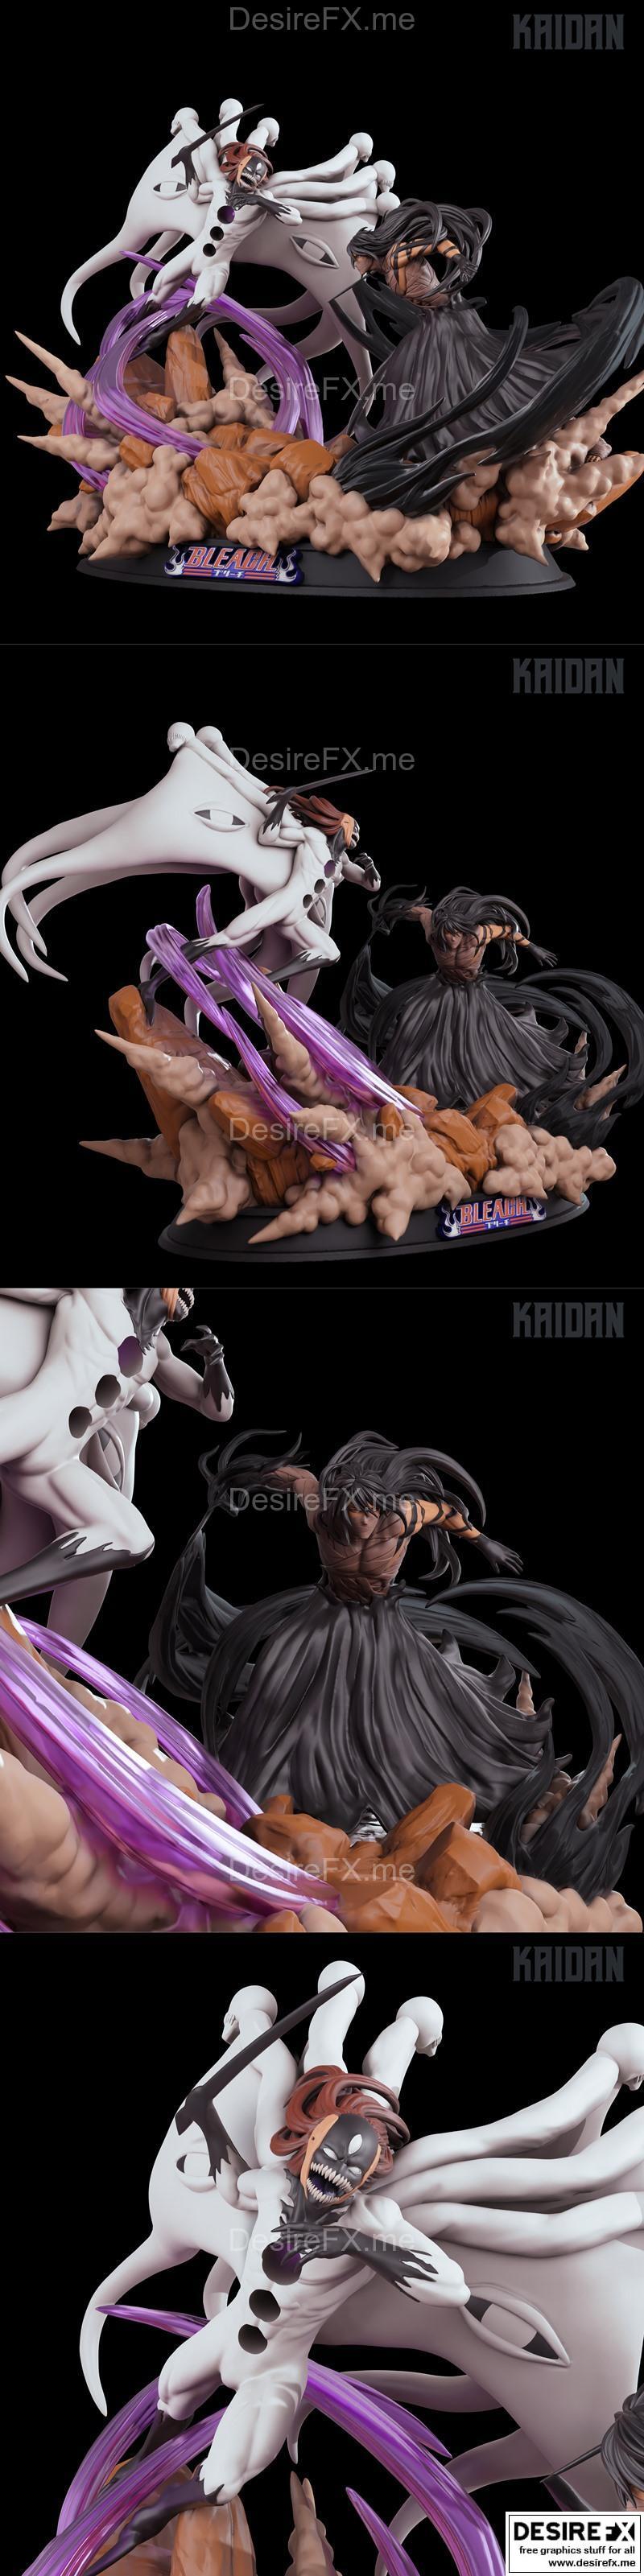 Desire FX 3d models | Kaidan Aizen vs Ichigo by Kaiden – 3D Print Model STL